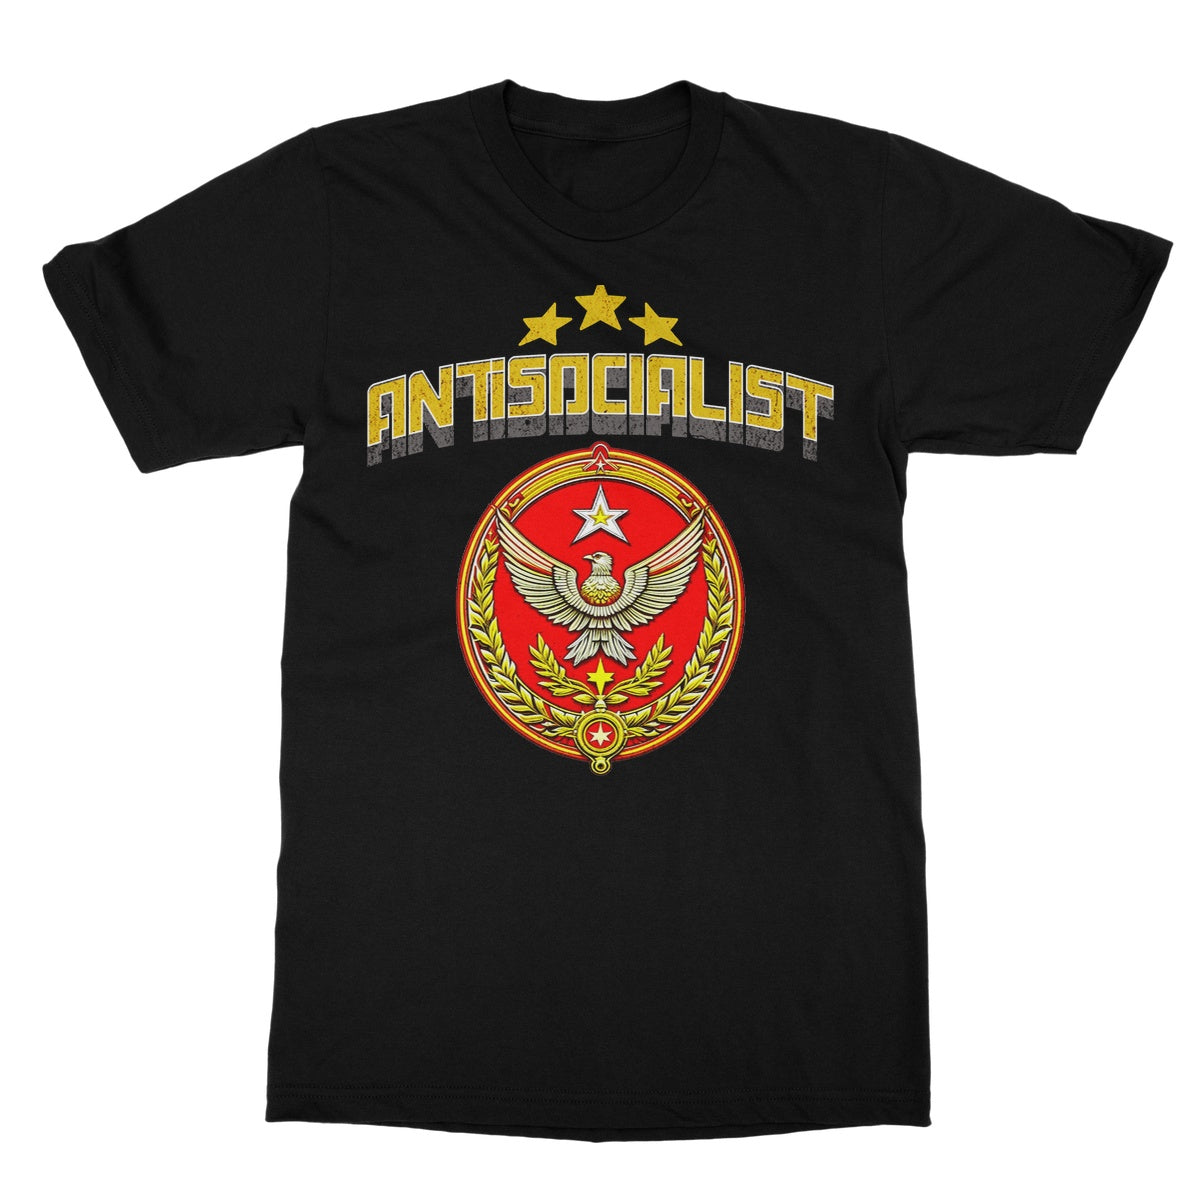 antisocialist t shirt black